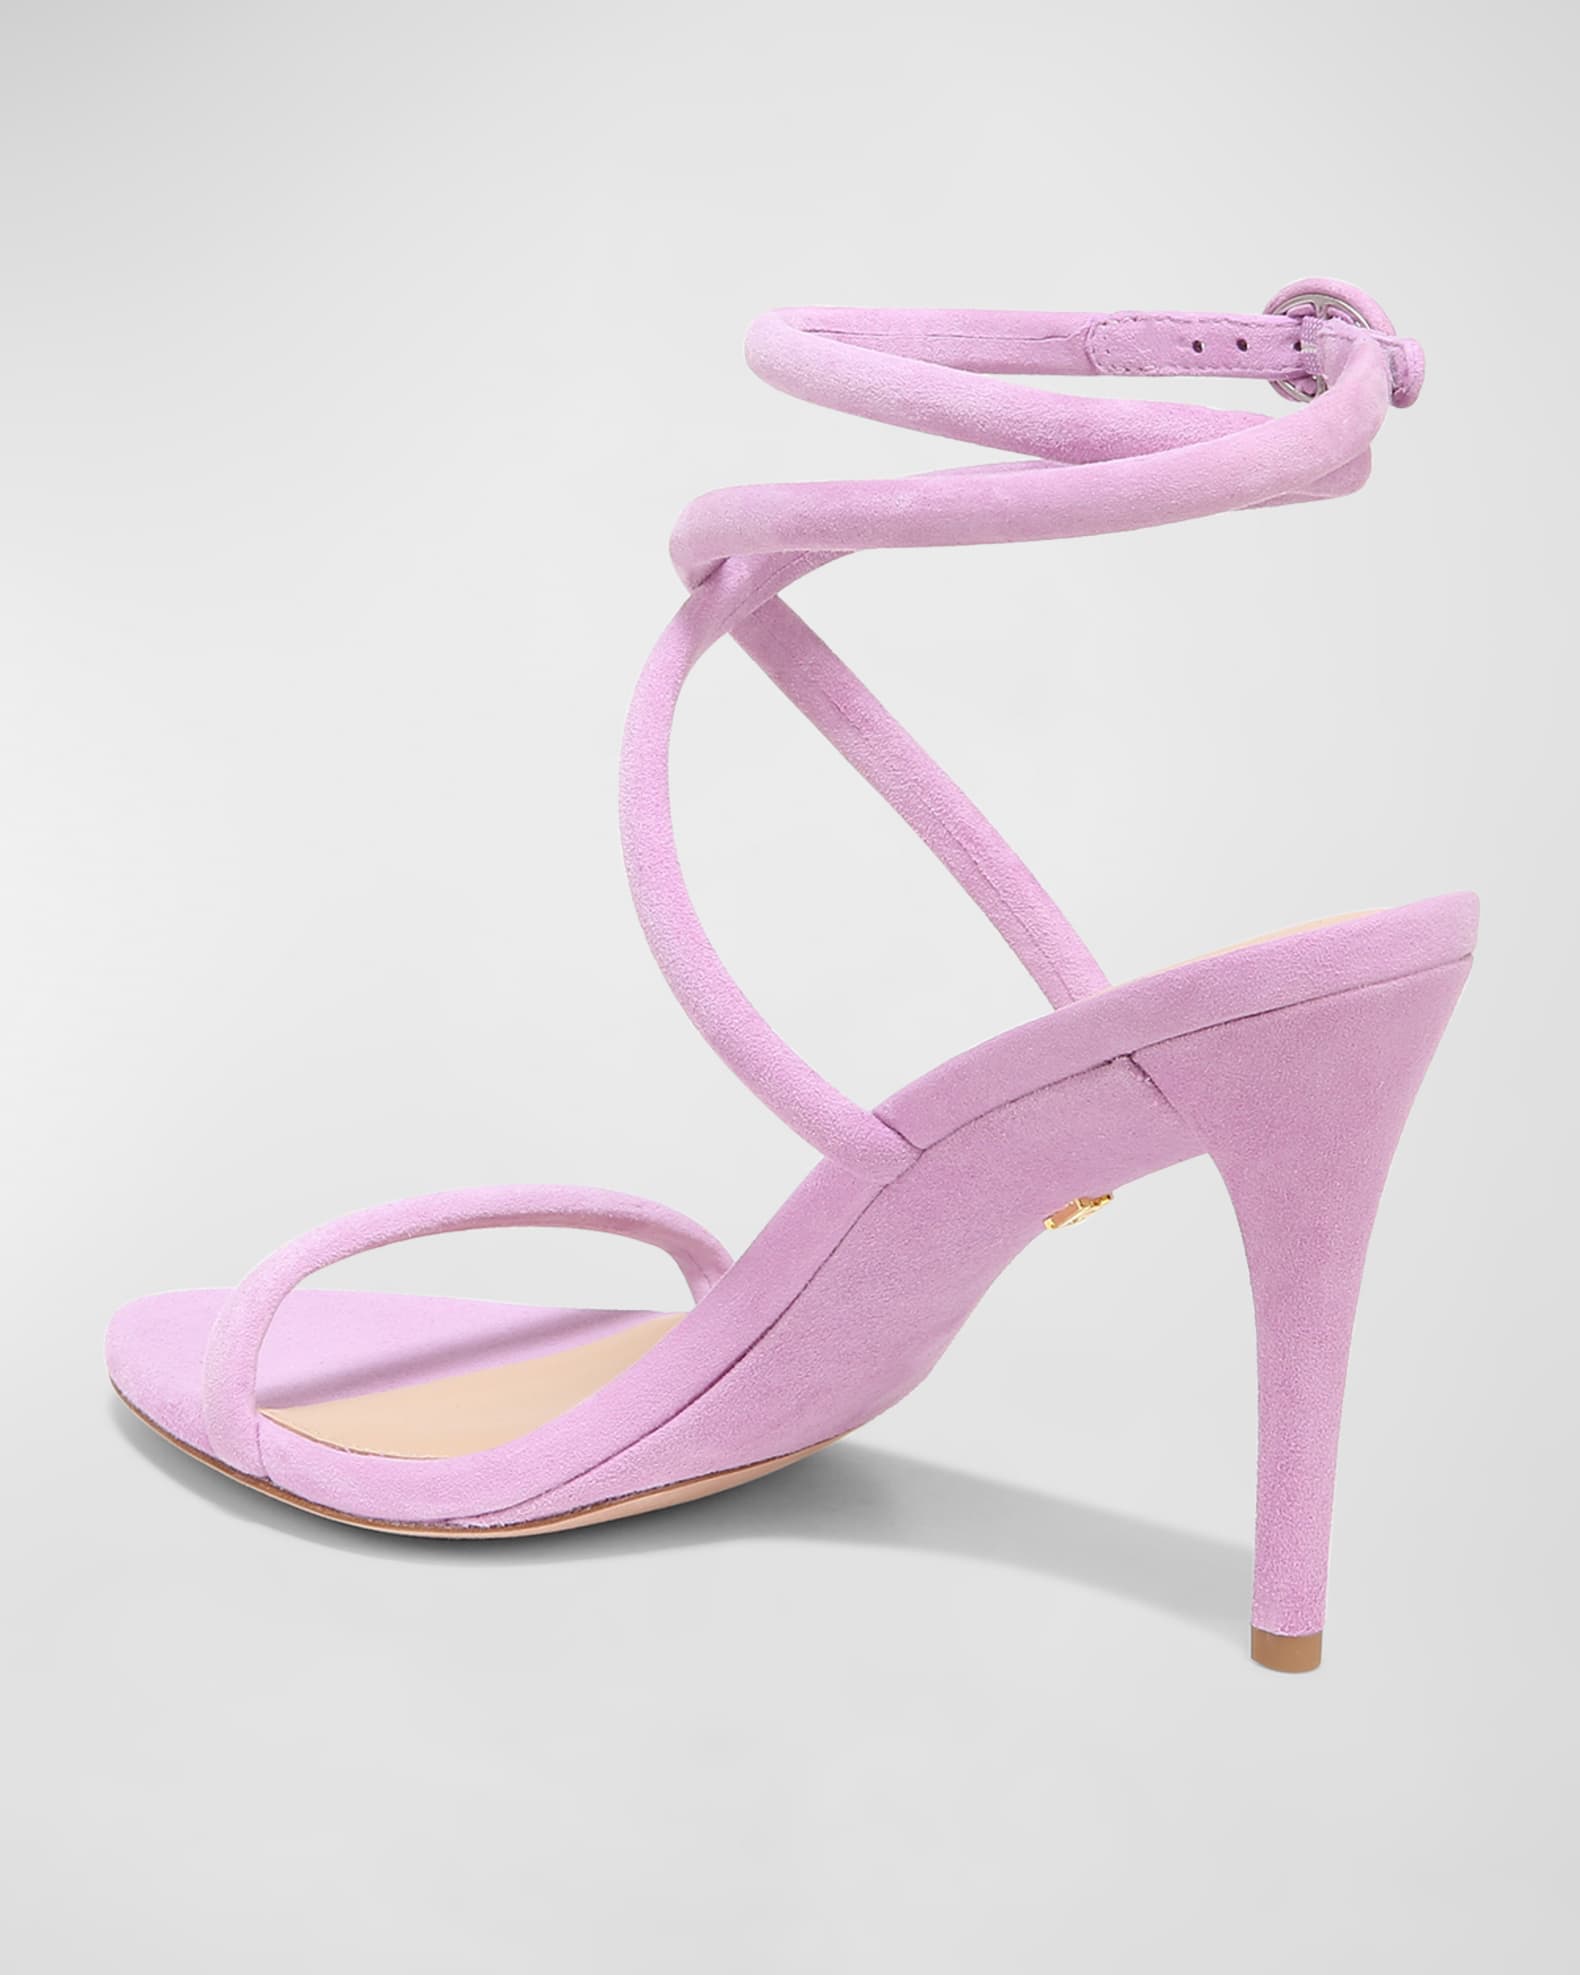 Veronica Beard Marceline Suede Crisscross Stiletto Sandals | Neiman Marcus